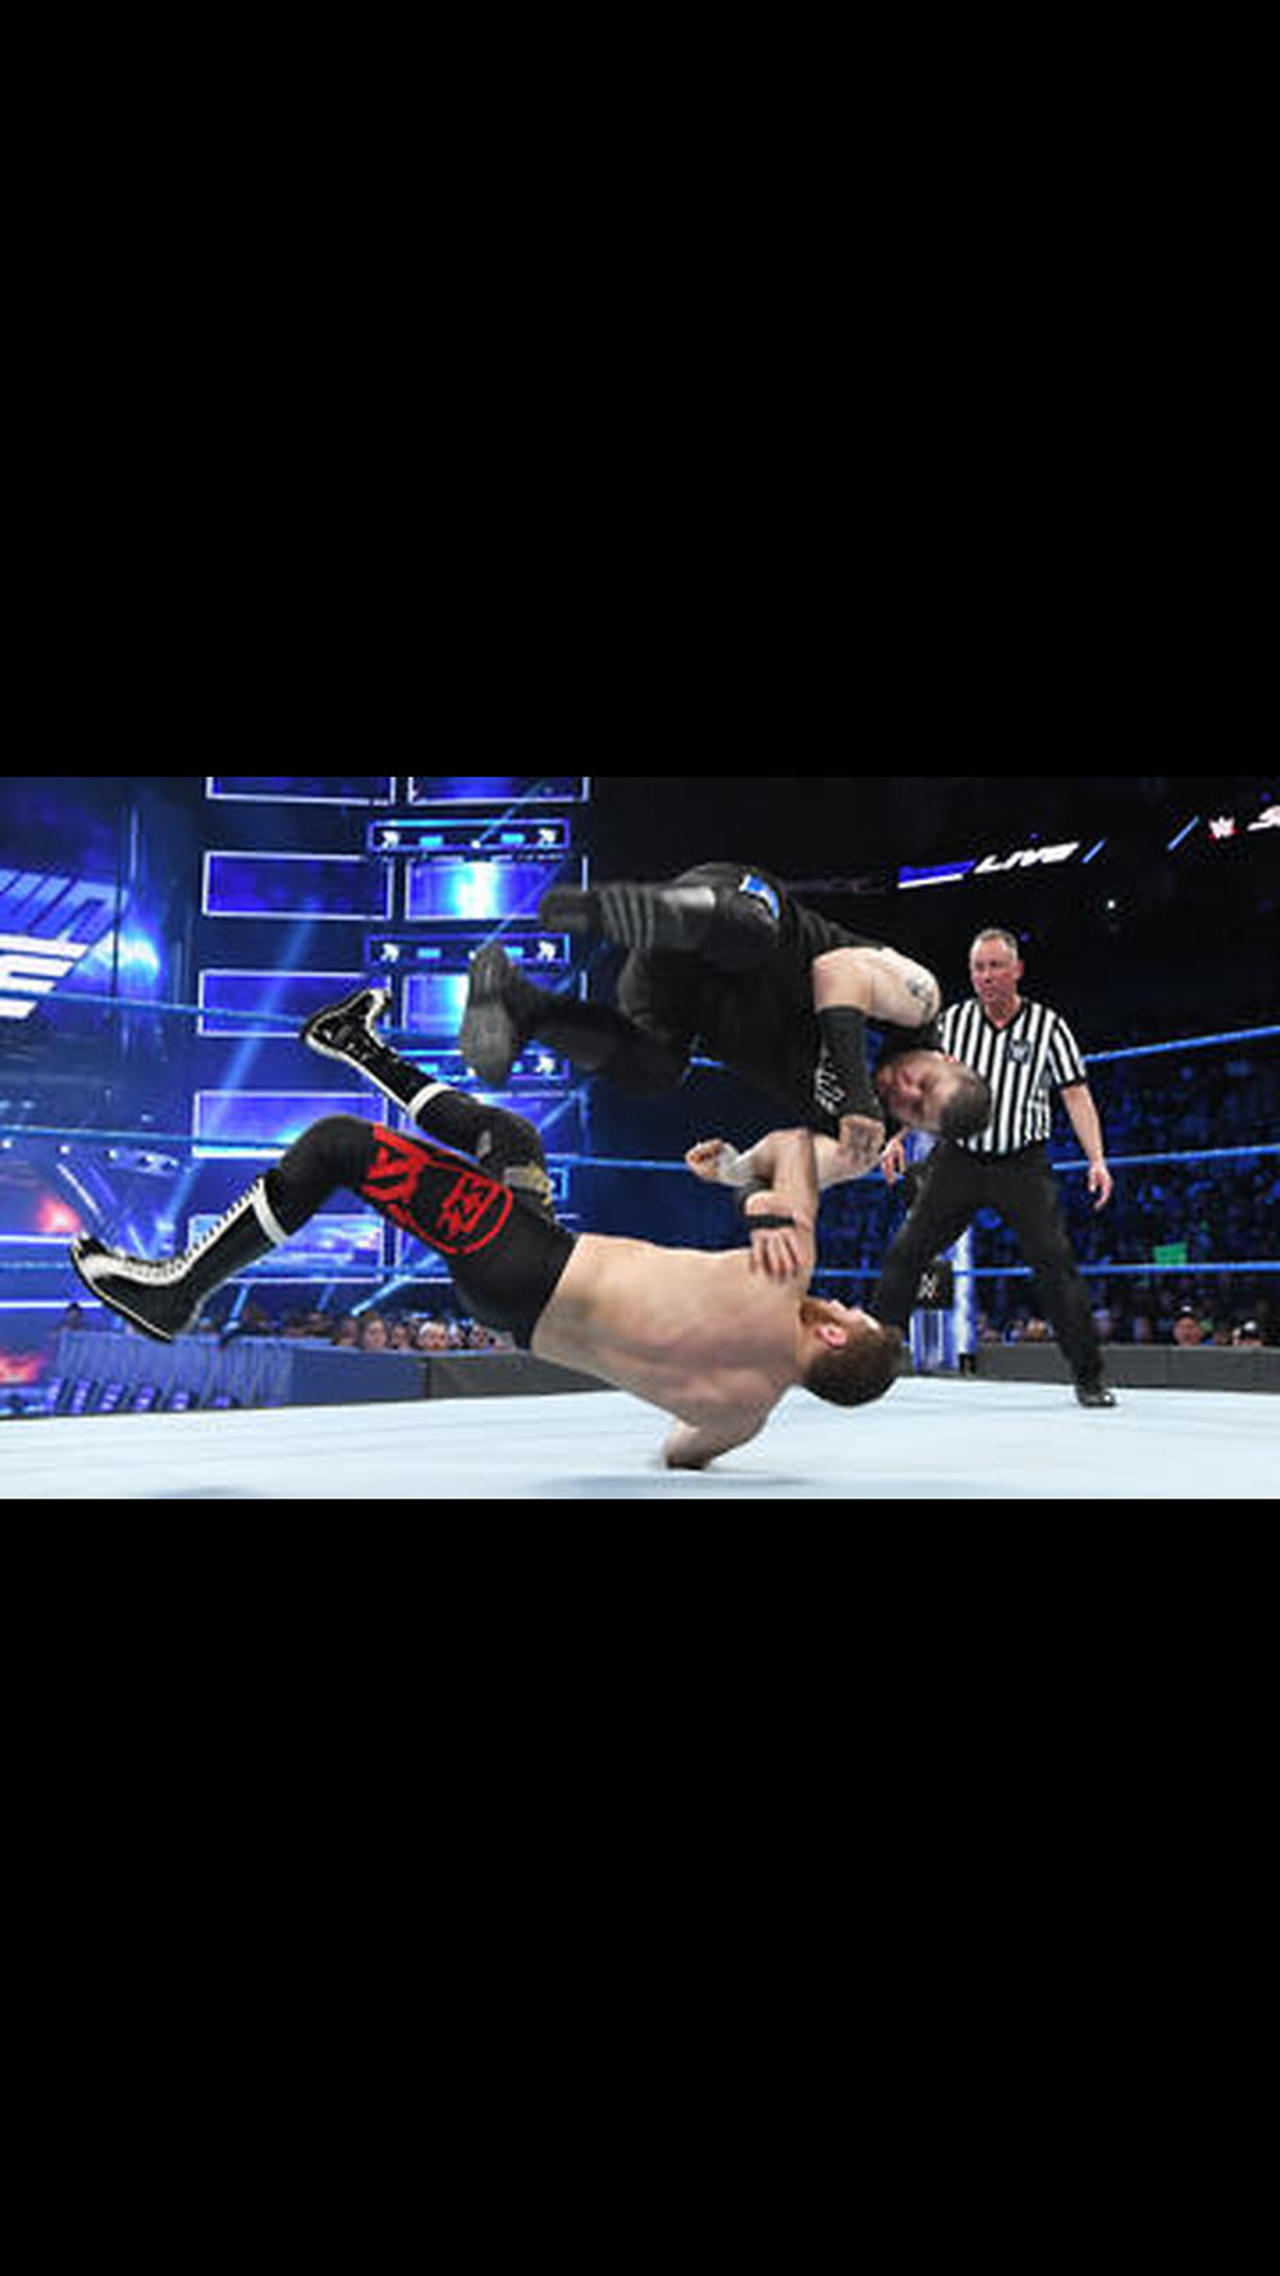 Kevin Owens vs. Sami Zayn - Winner faces WWE Champion AJ Styles at WWE Fastlane